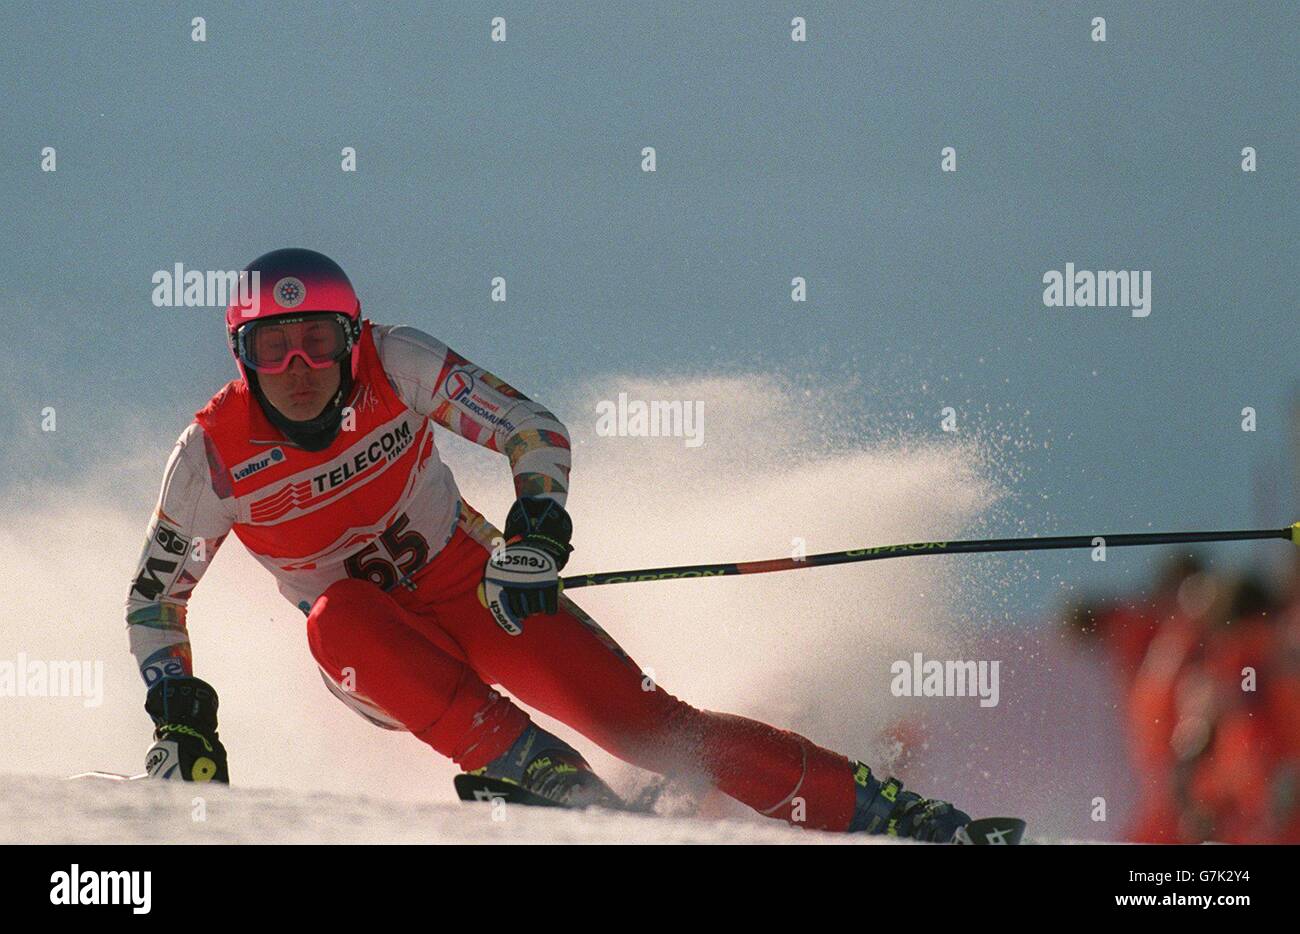 Skiing - Alpine World Ski Championships - 7th Giant Slalom Men - Sestrieres 97 Stock Photo